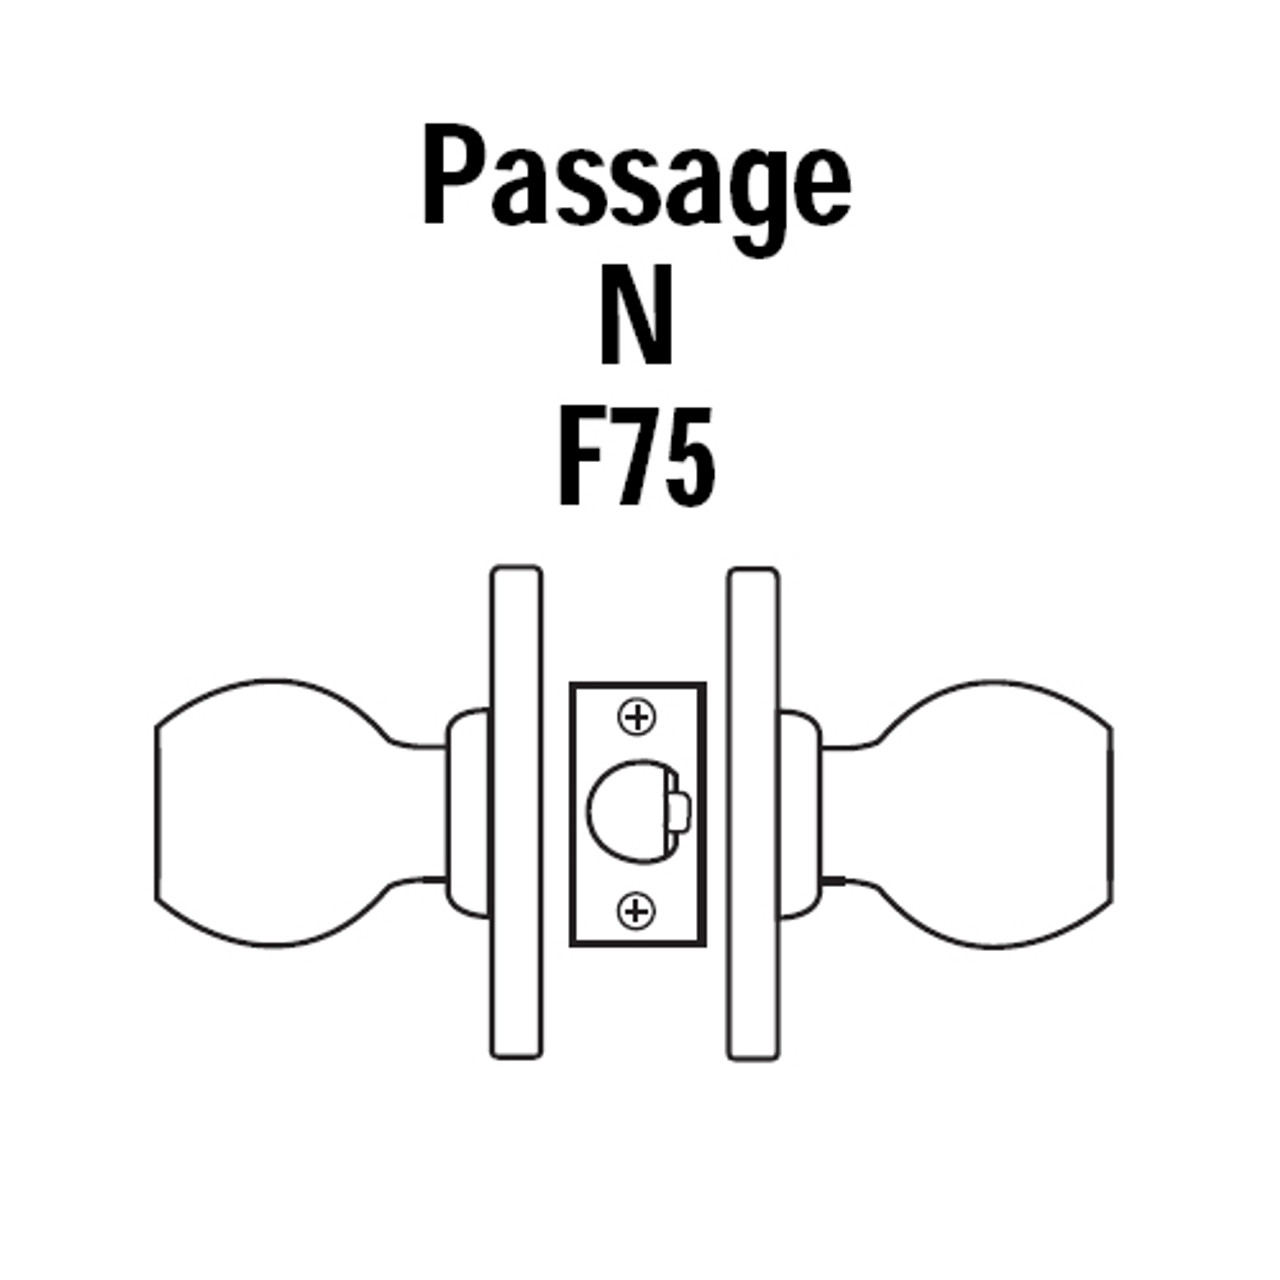 8K30N4CS3626 Best 8K Series Passage Heavy Duty Cylindrical Knob Locks with Round Style in Satin Chrome